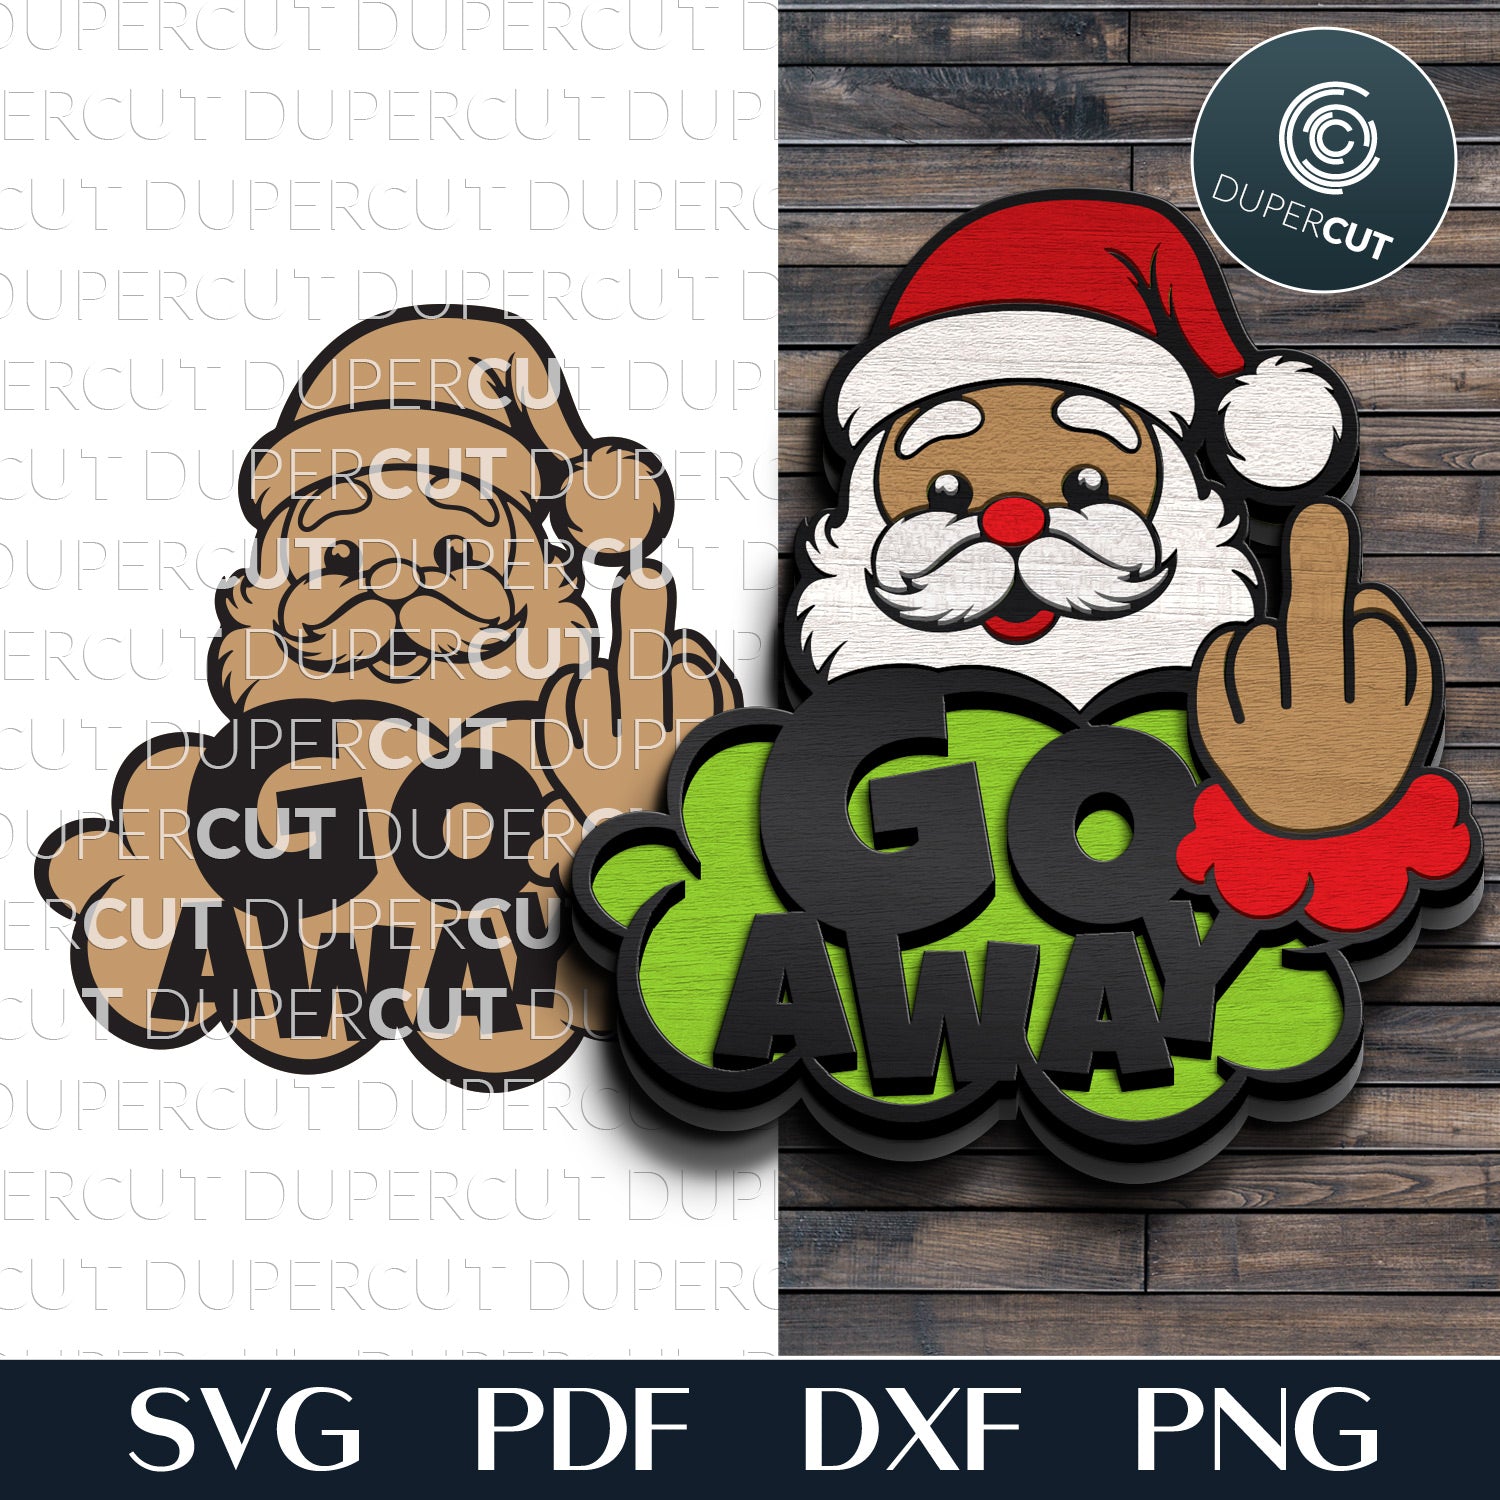 Secret Santa SVG file - SVG cut files.com